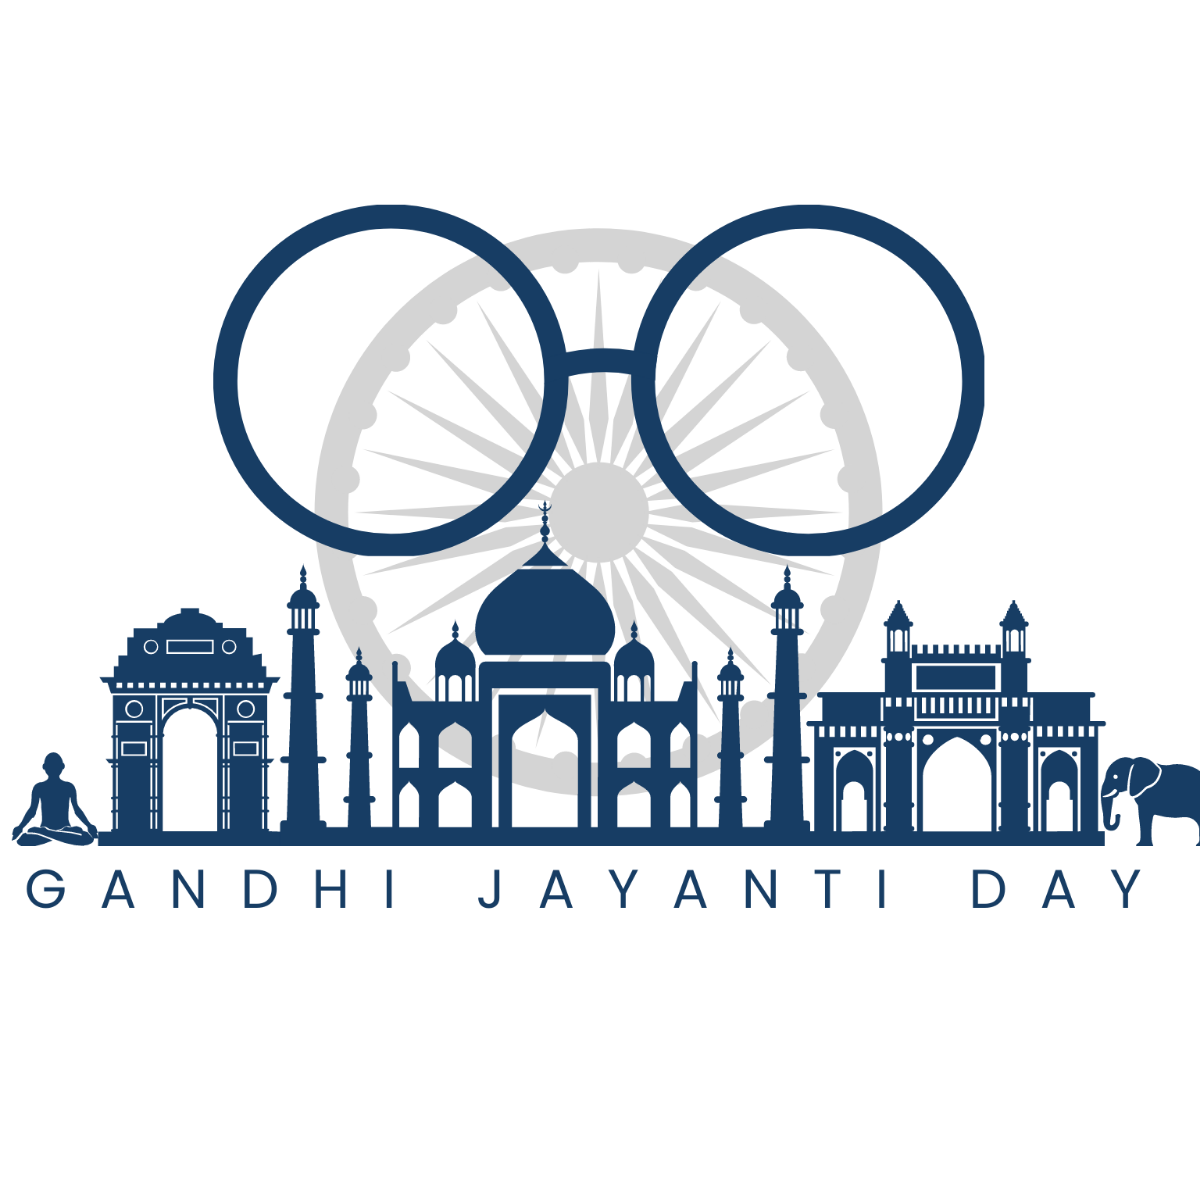 Gandhi Jayanti Day Vector Template